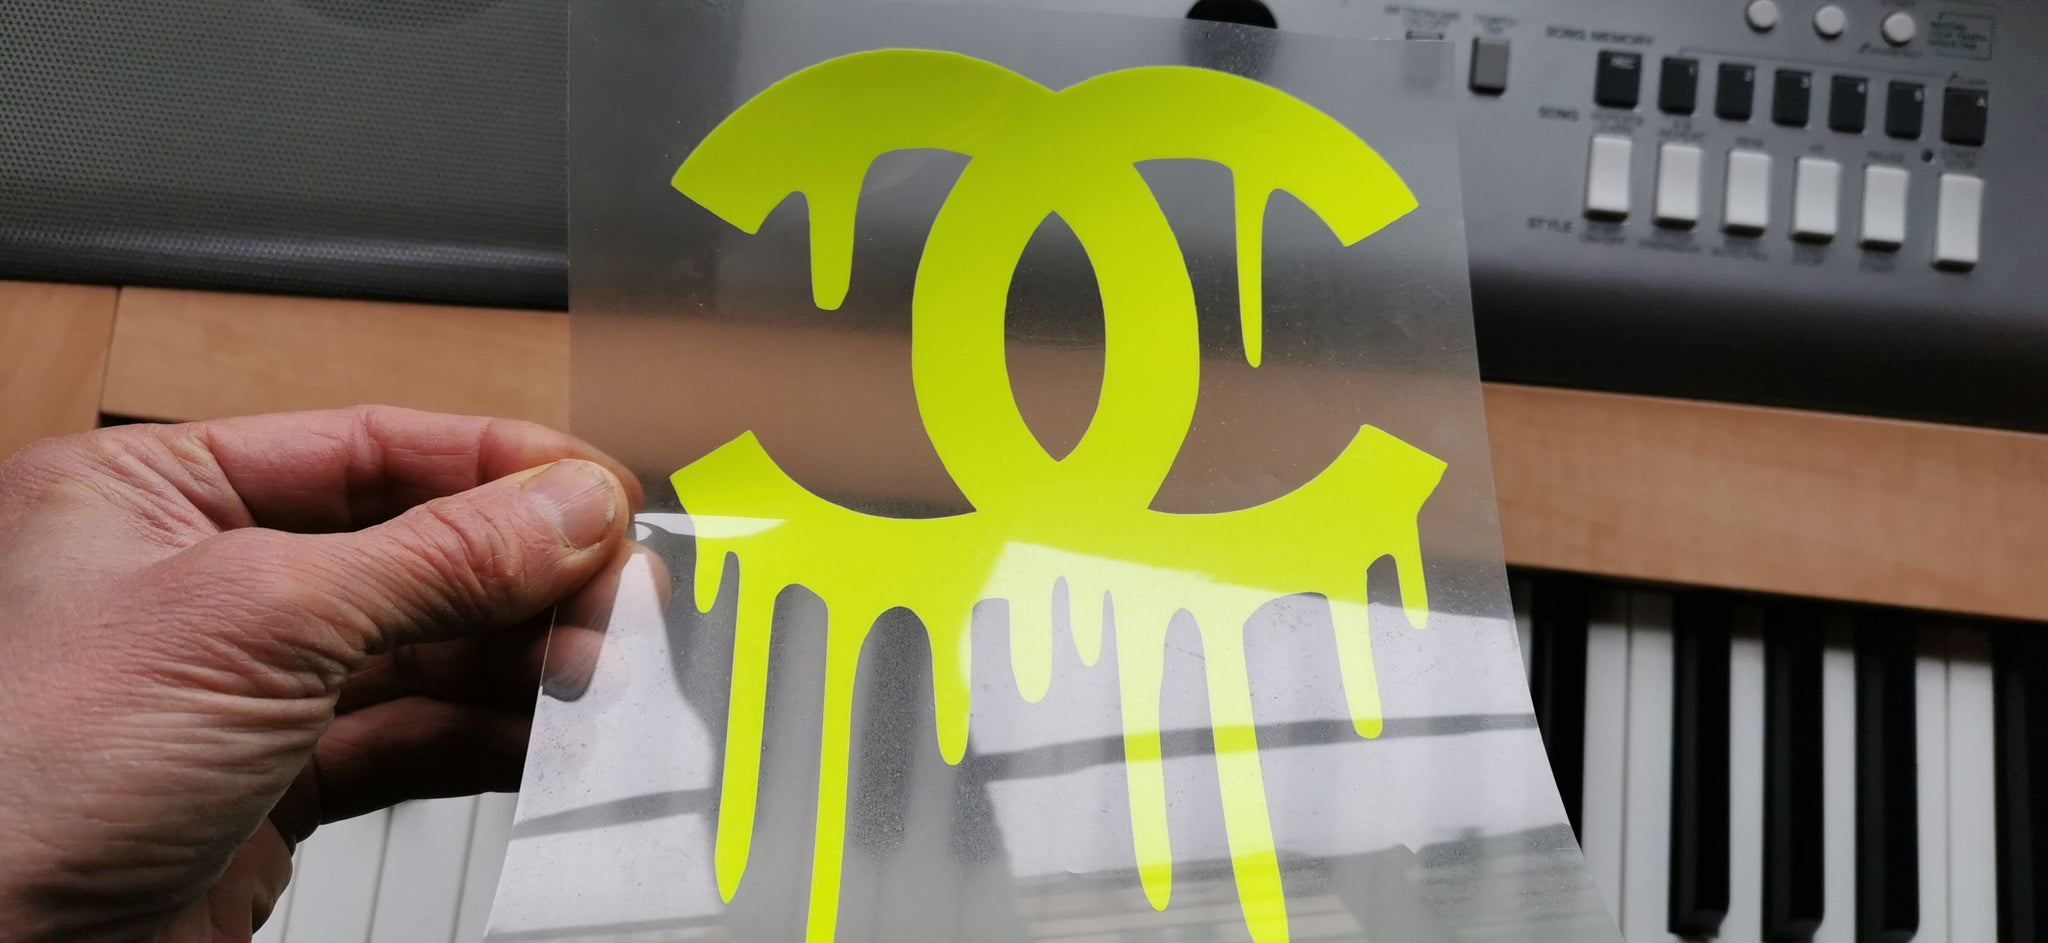 CHANEL Drip Logo Iron On Heat Transfer Vinyl HTV